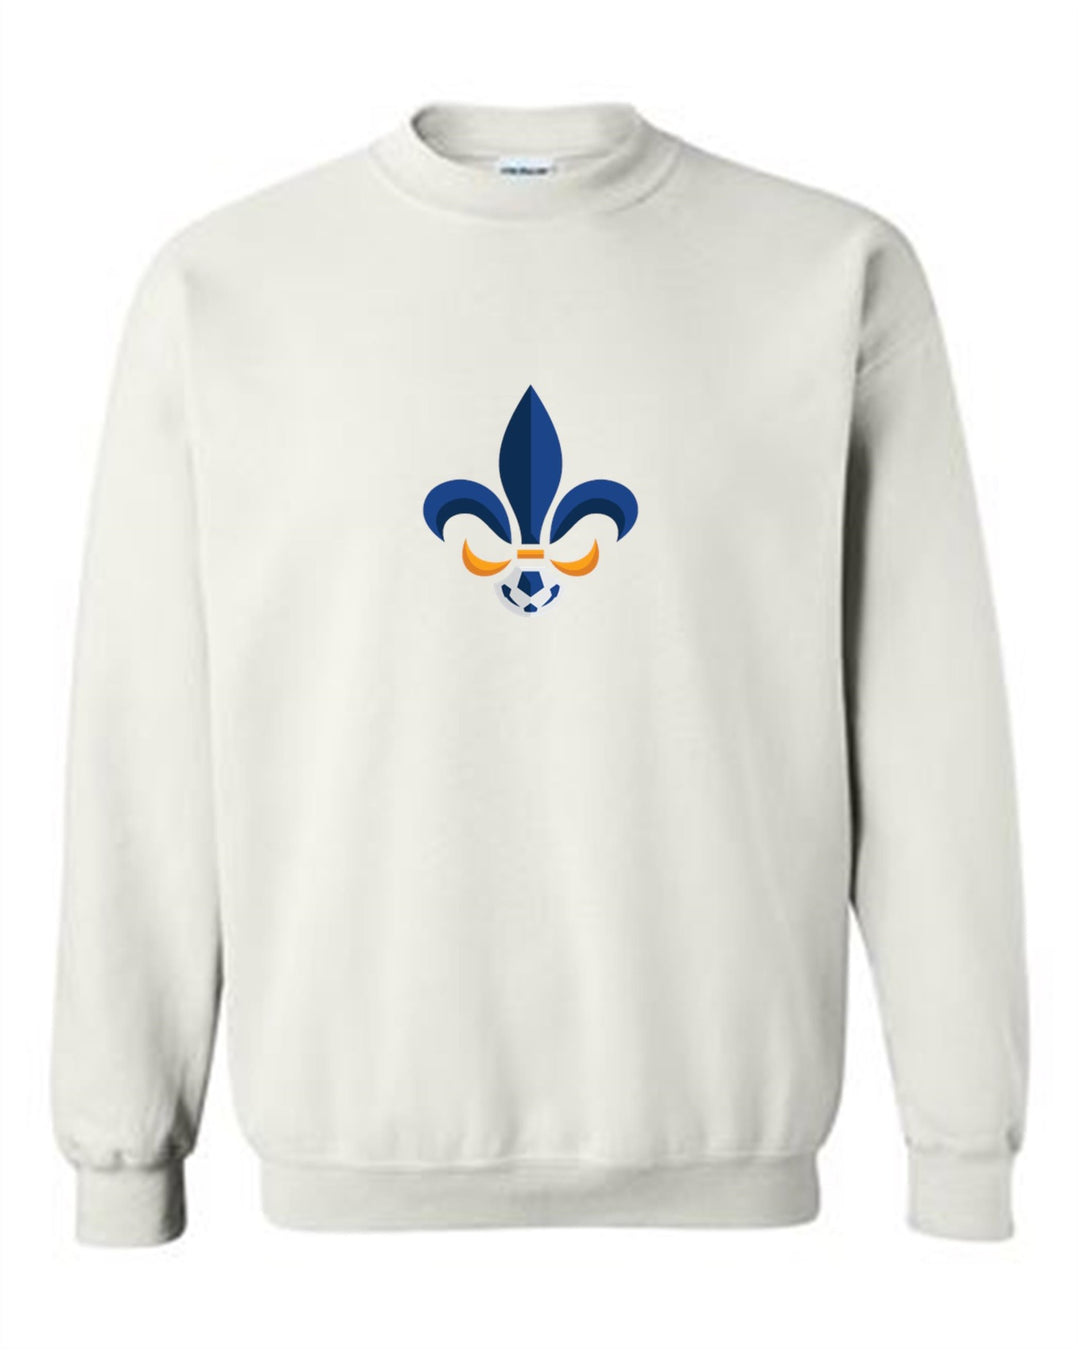 Louisiana Select Logo Crew Neck Sweatshirt LA ODP Spiritwear White Youth Small - Third Coast Soccer